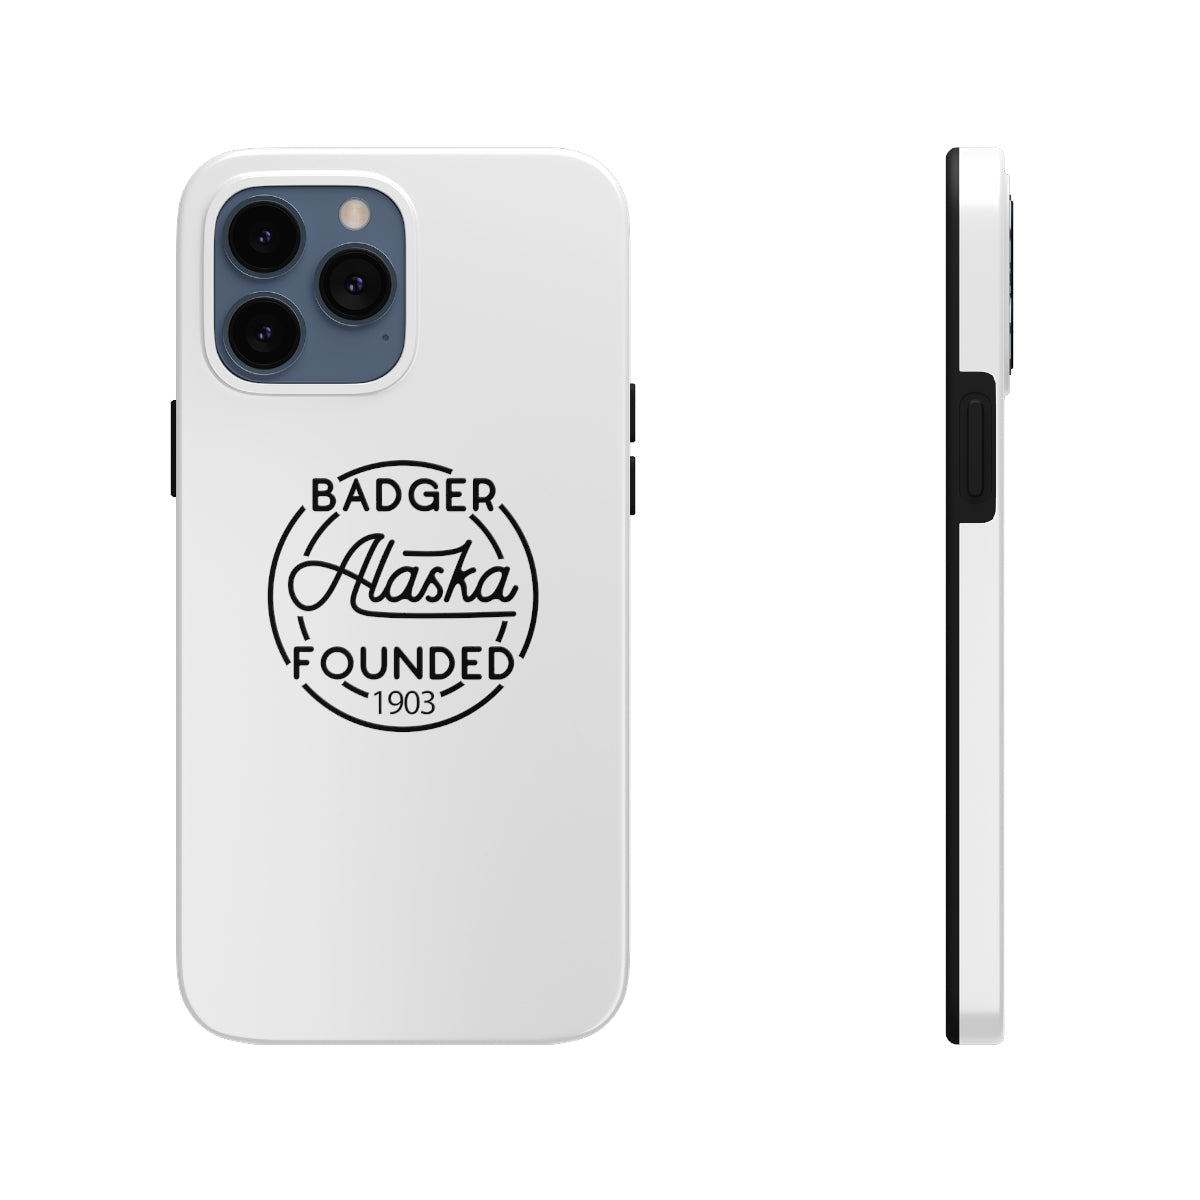 White iphone 13 pro max case for Badger, Alaska